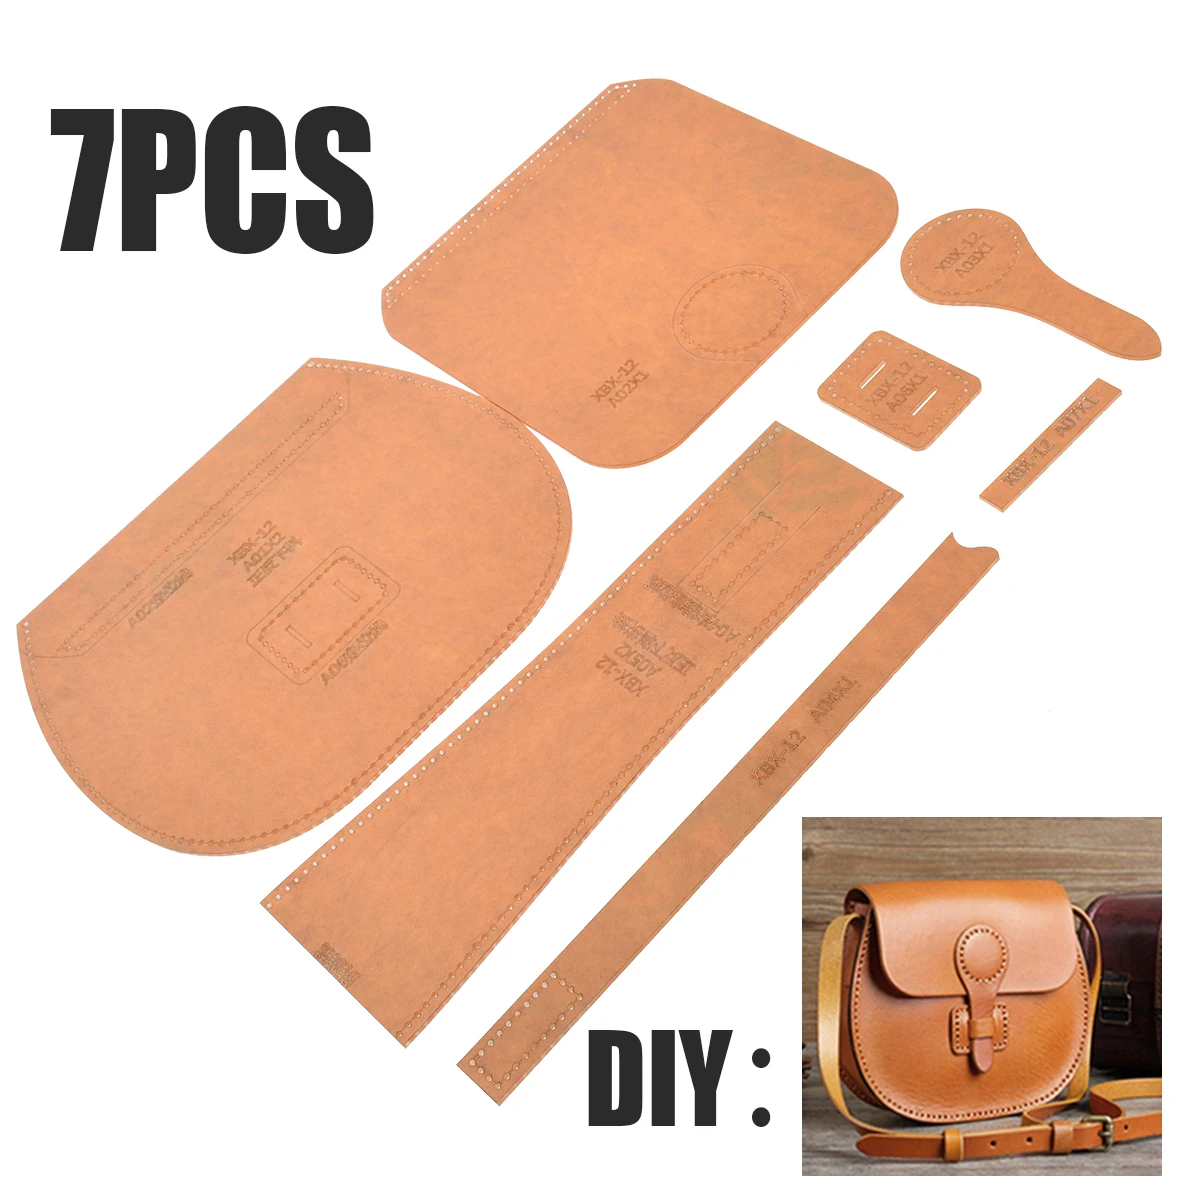 1 Set Acrylic Template Leather Craft Bag Pattern Stencil Durable Homemade Tool for DIY Handbag ...